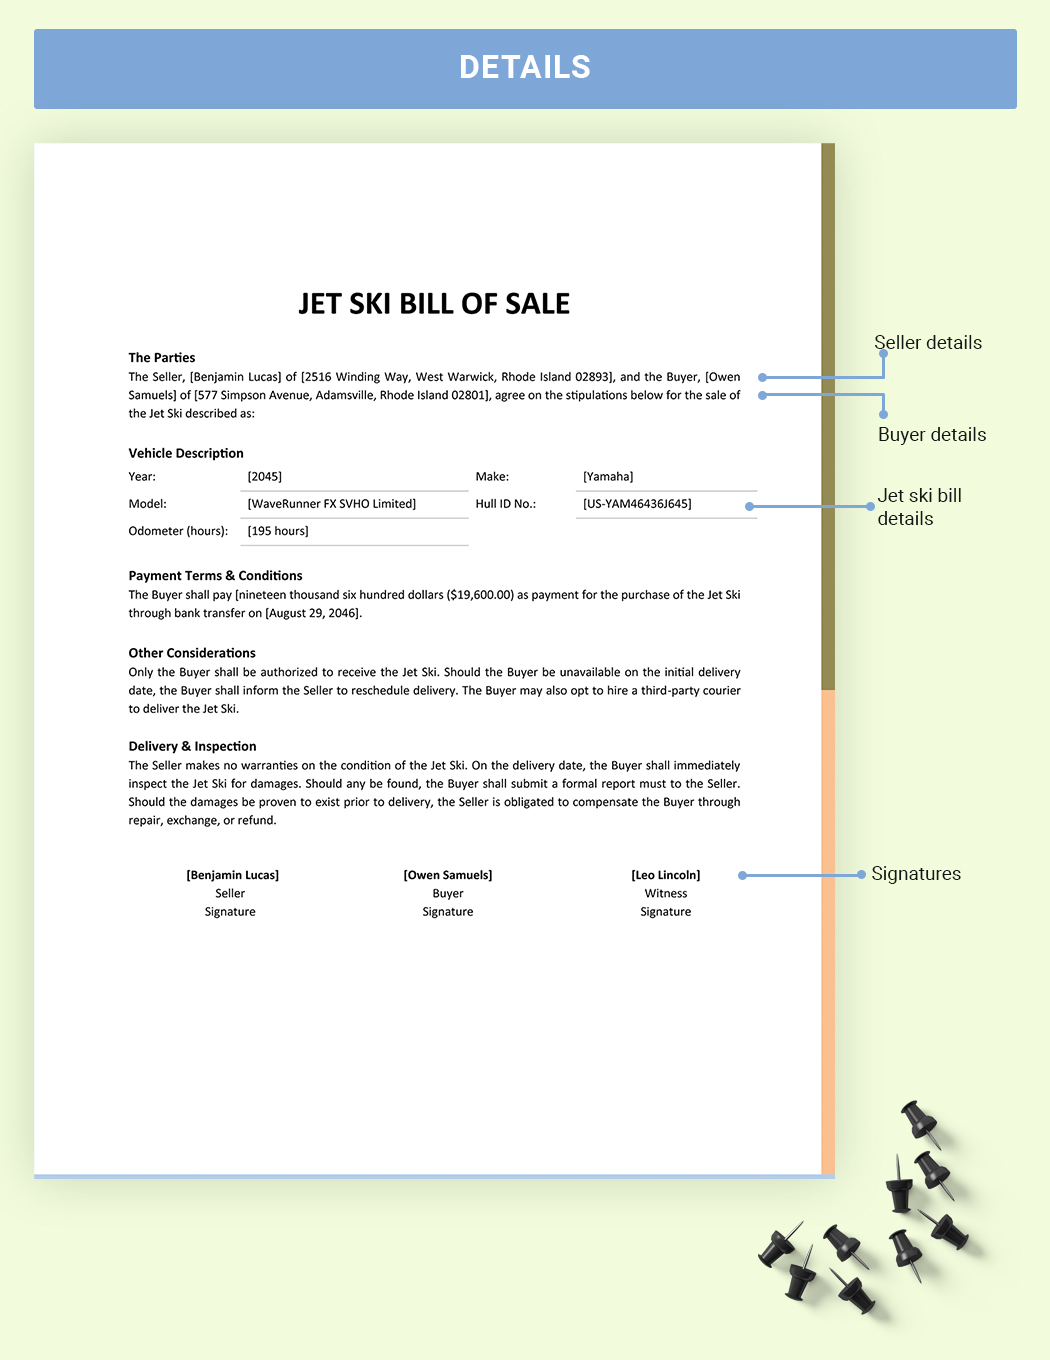 Jet Ski Bill Of Sale Template Download in Word, Google Docs, PDF